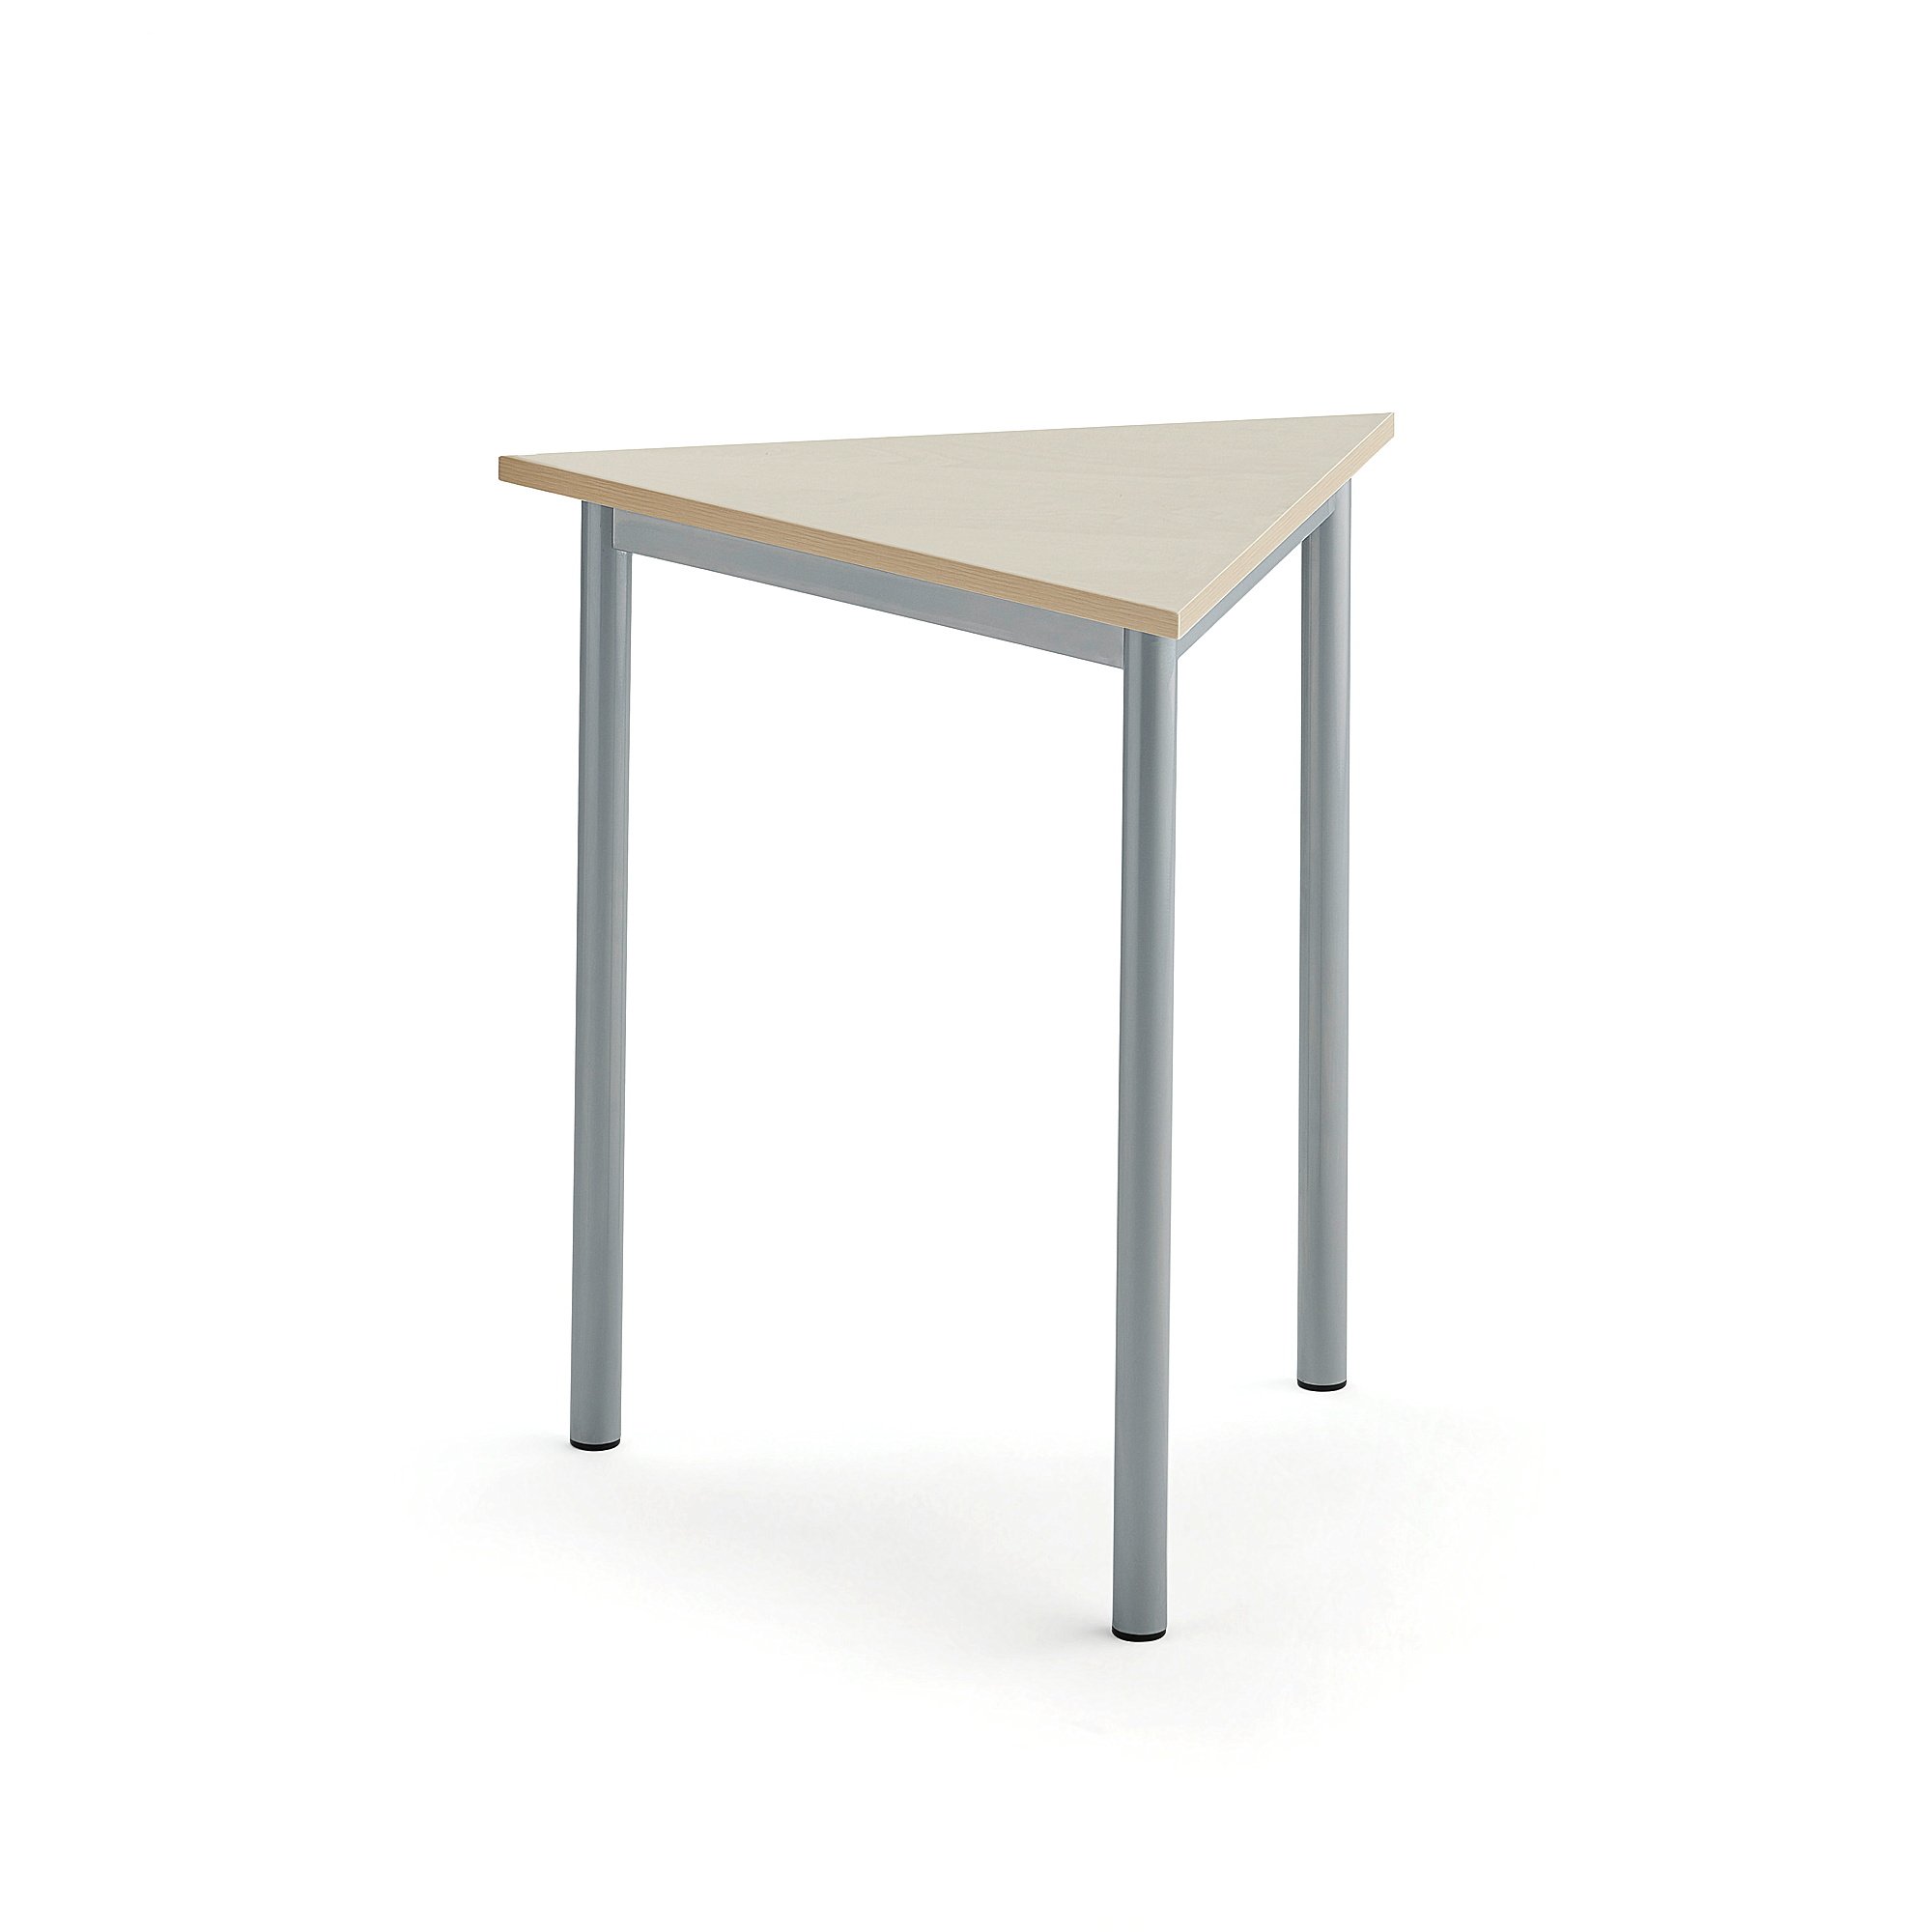 Stůl BORÅS TRIANGEL, 700x700x720 mm, stříbrné nohy, HPL deska, bříza